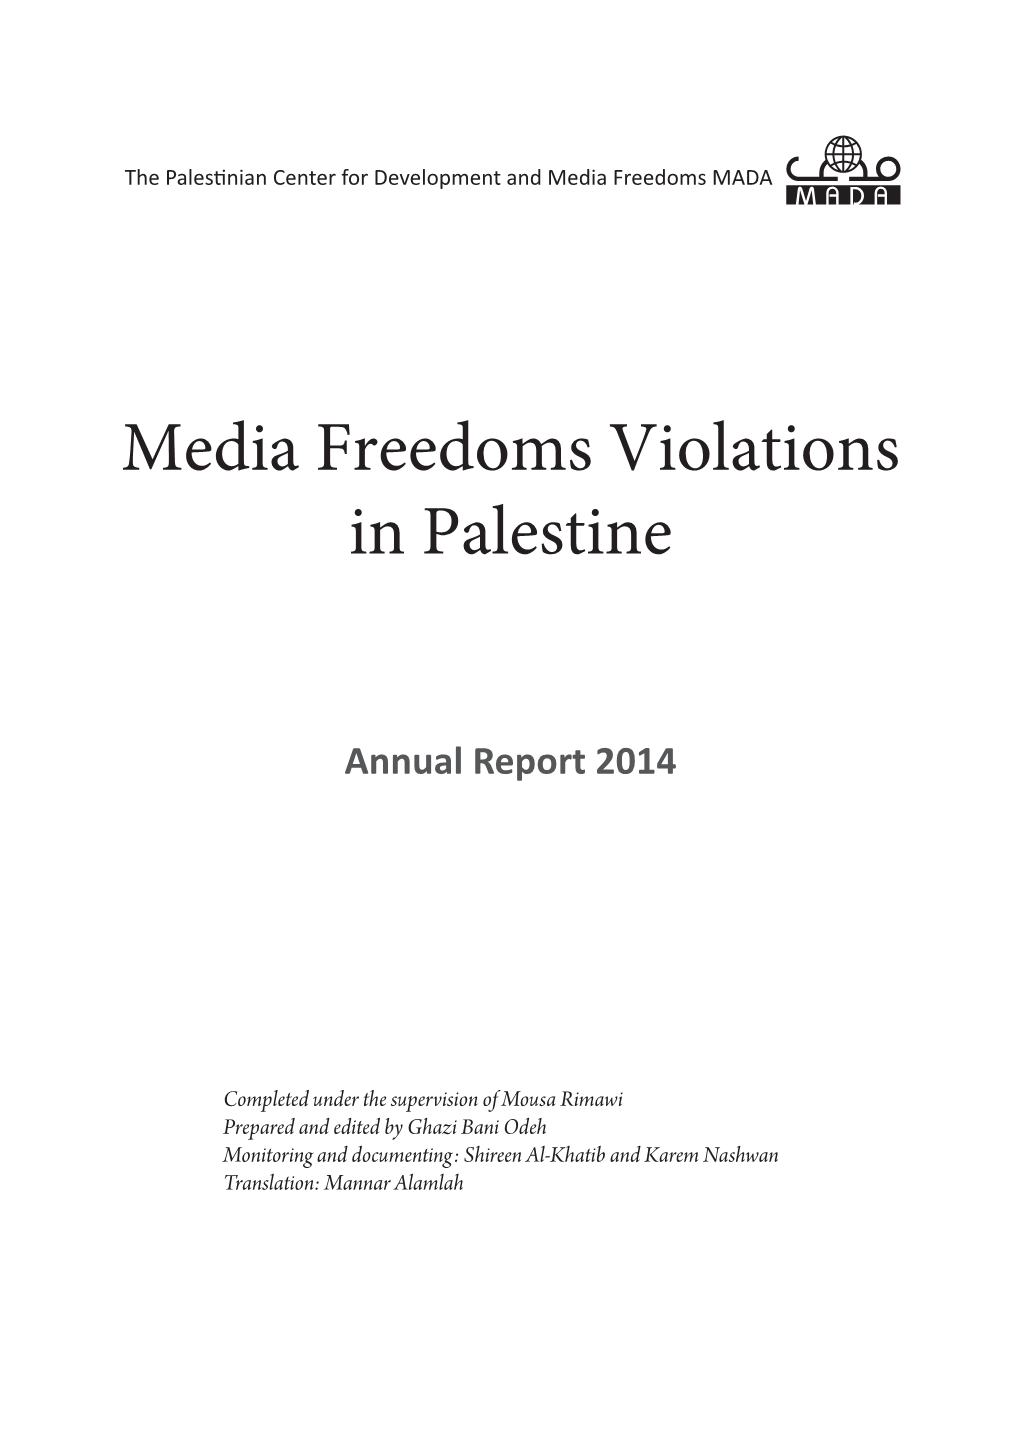 Media Freedoms Violations in Palestine